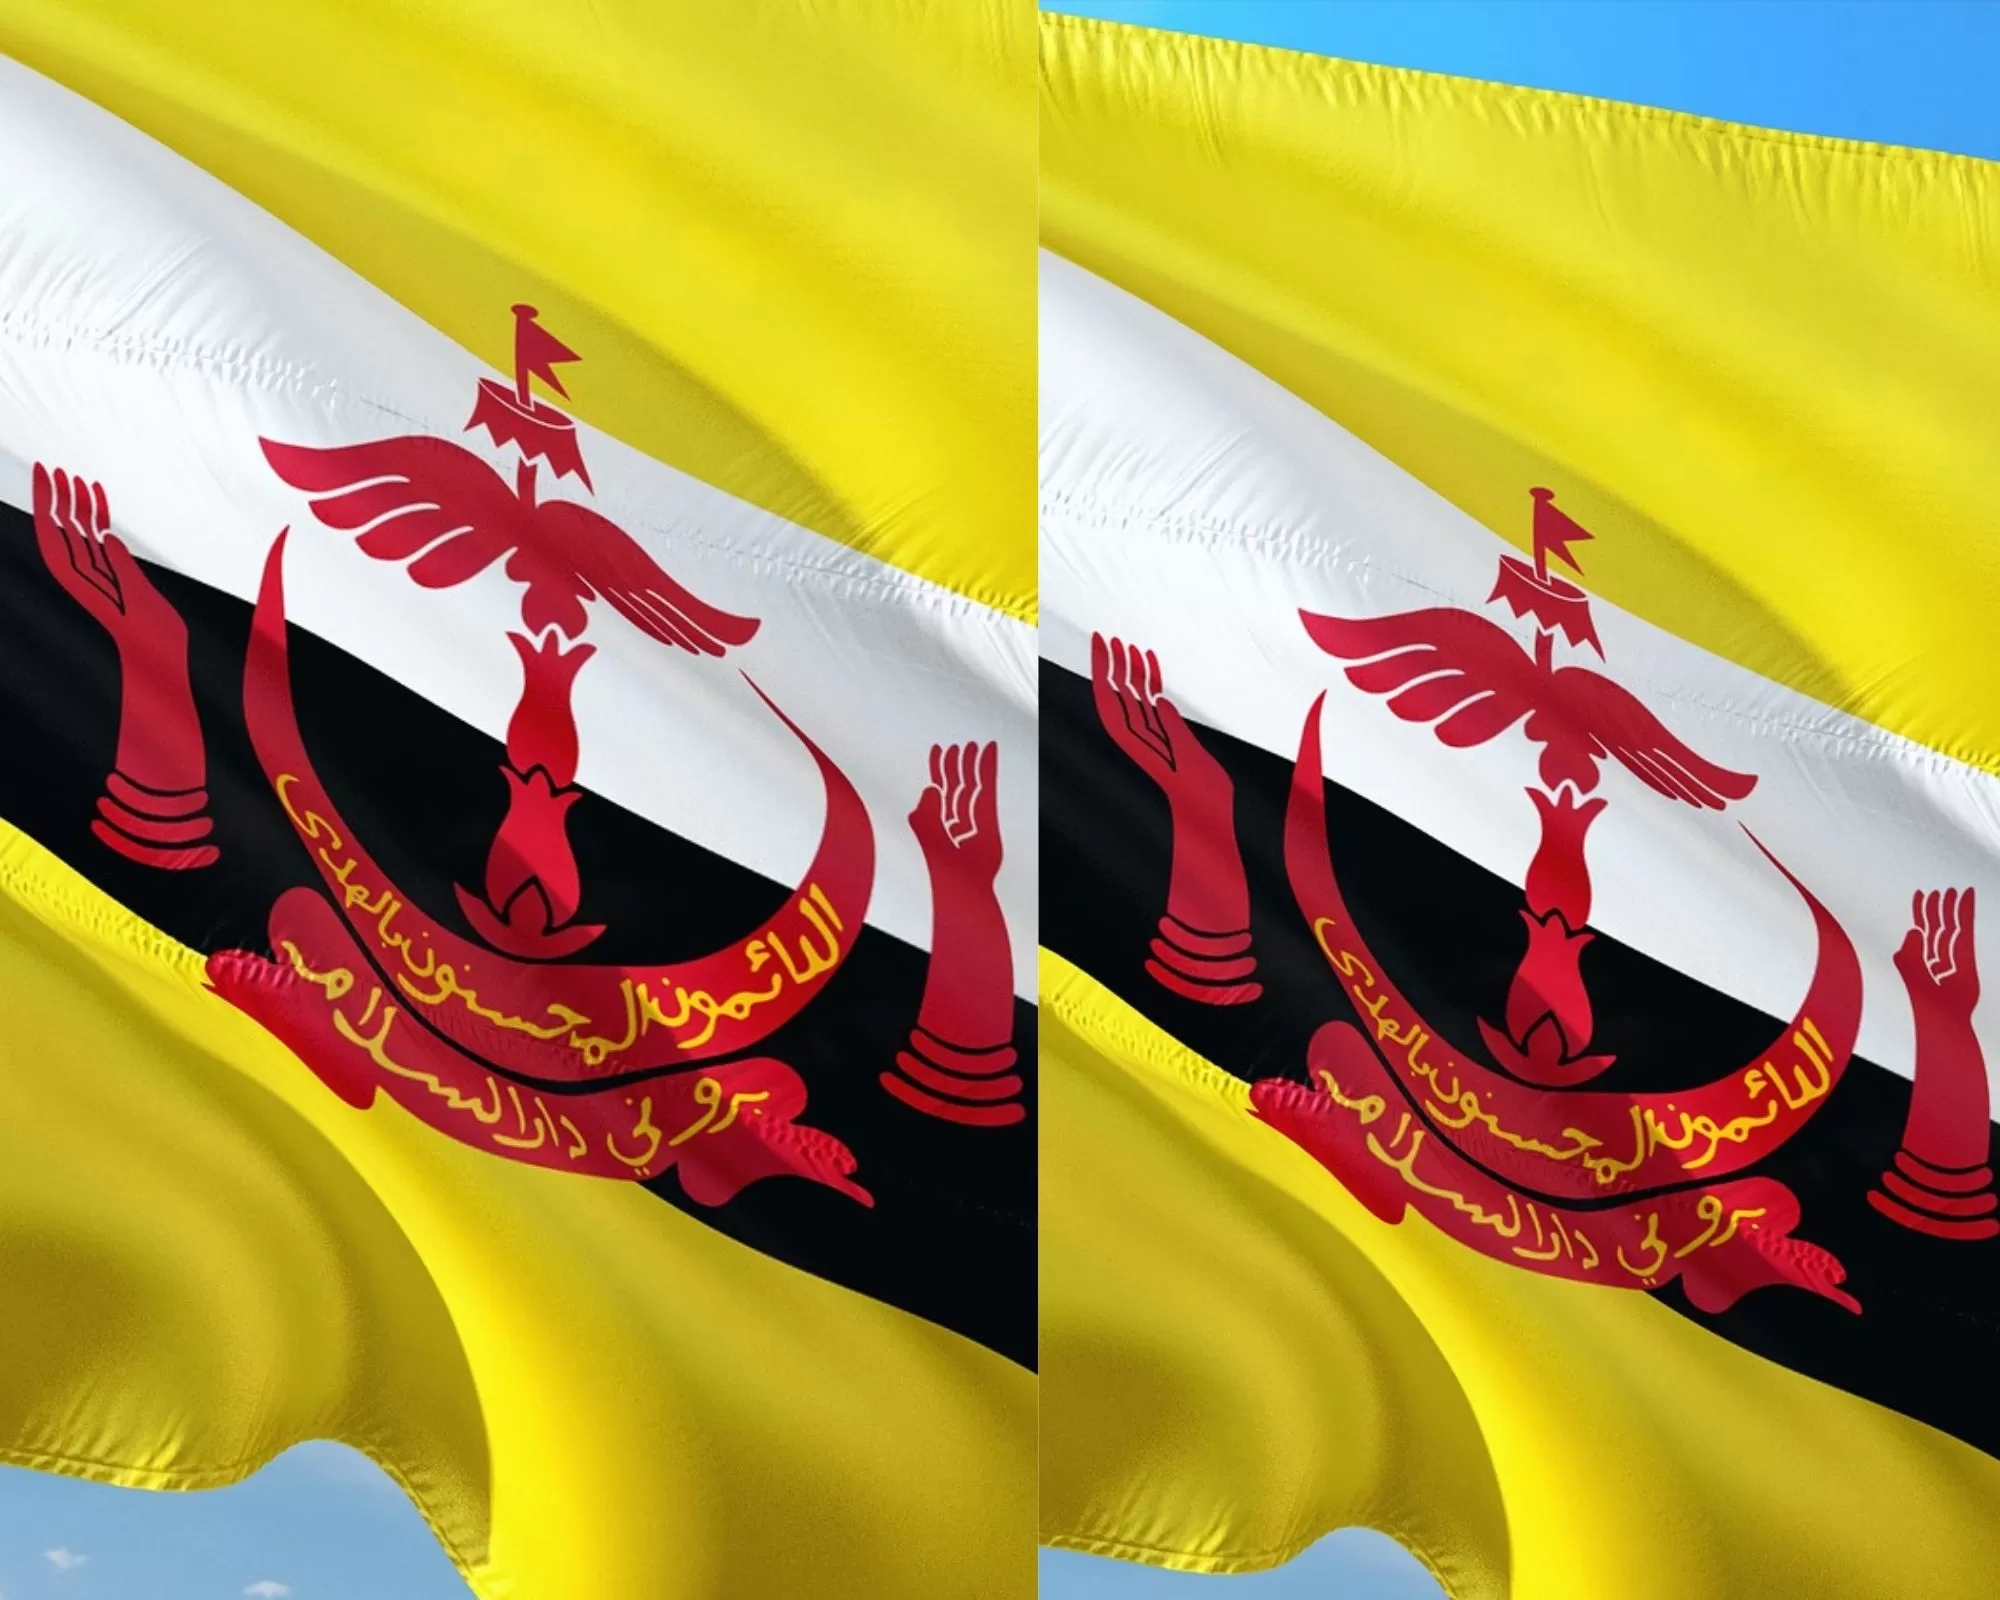 Negara Brunei,Sebuah Negara Terkecil Di Dunia,Nemun Memiliki Sejarah,Budaya,Dan Ekonomi yang Kaya